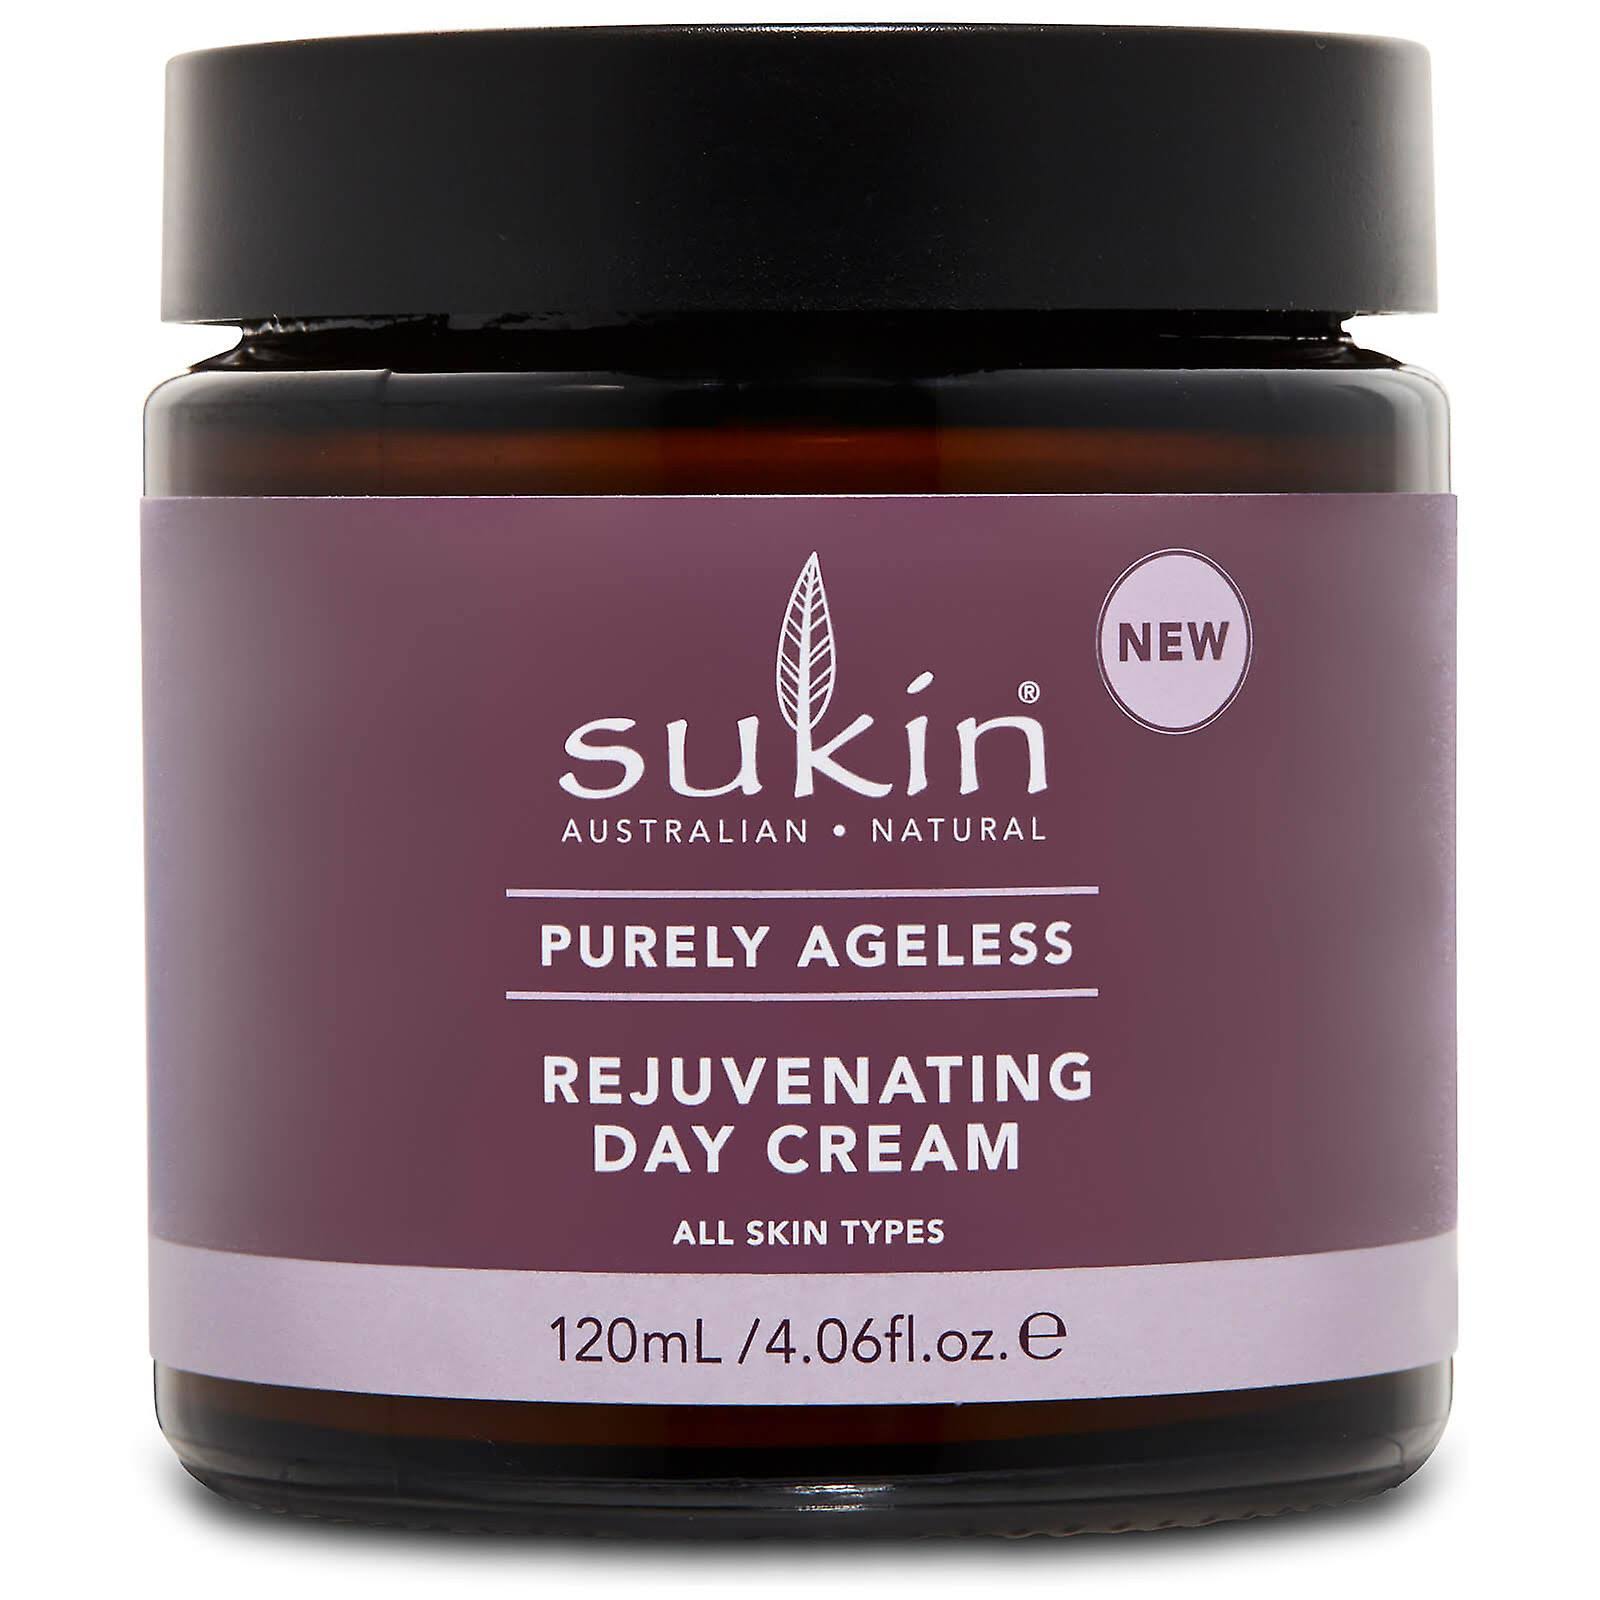 Sukin Purely Ageless Rejuvenating Day Cream - 120ml